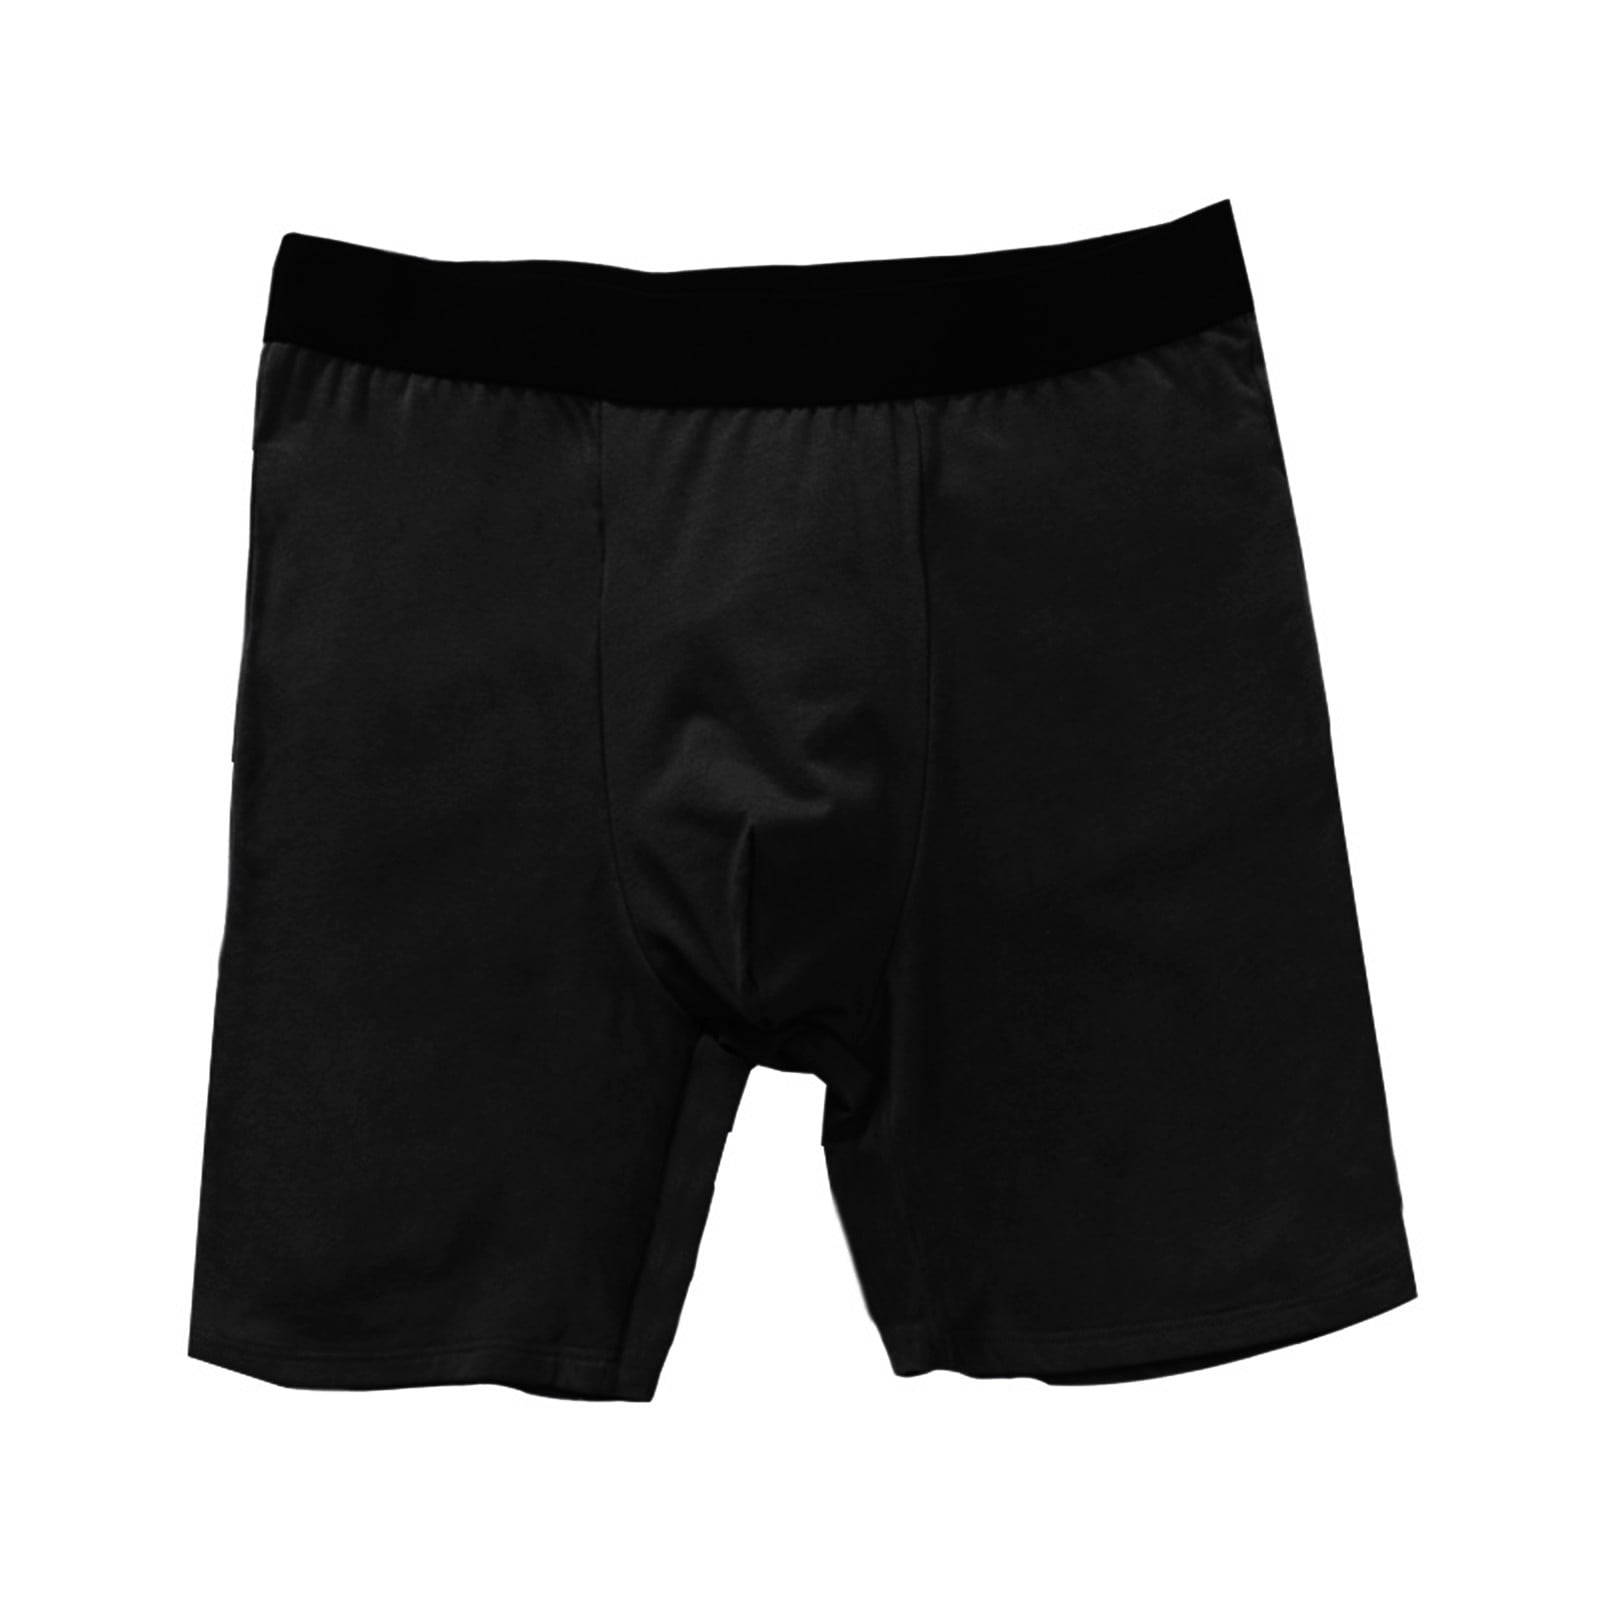 KaLI_store Men Boxers Men's Underwear - Performance Boxer Briefs with Fly  Pouch Black,XL 